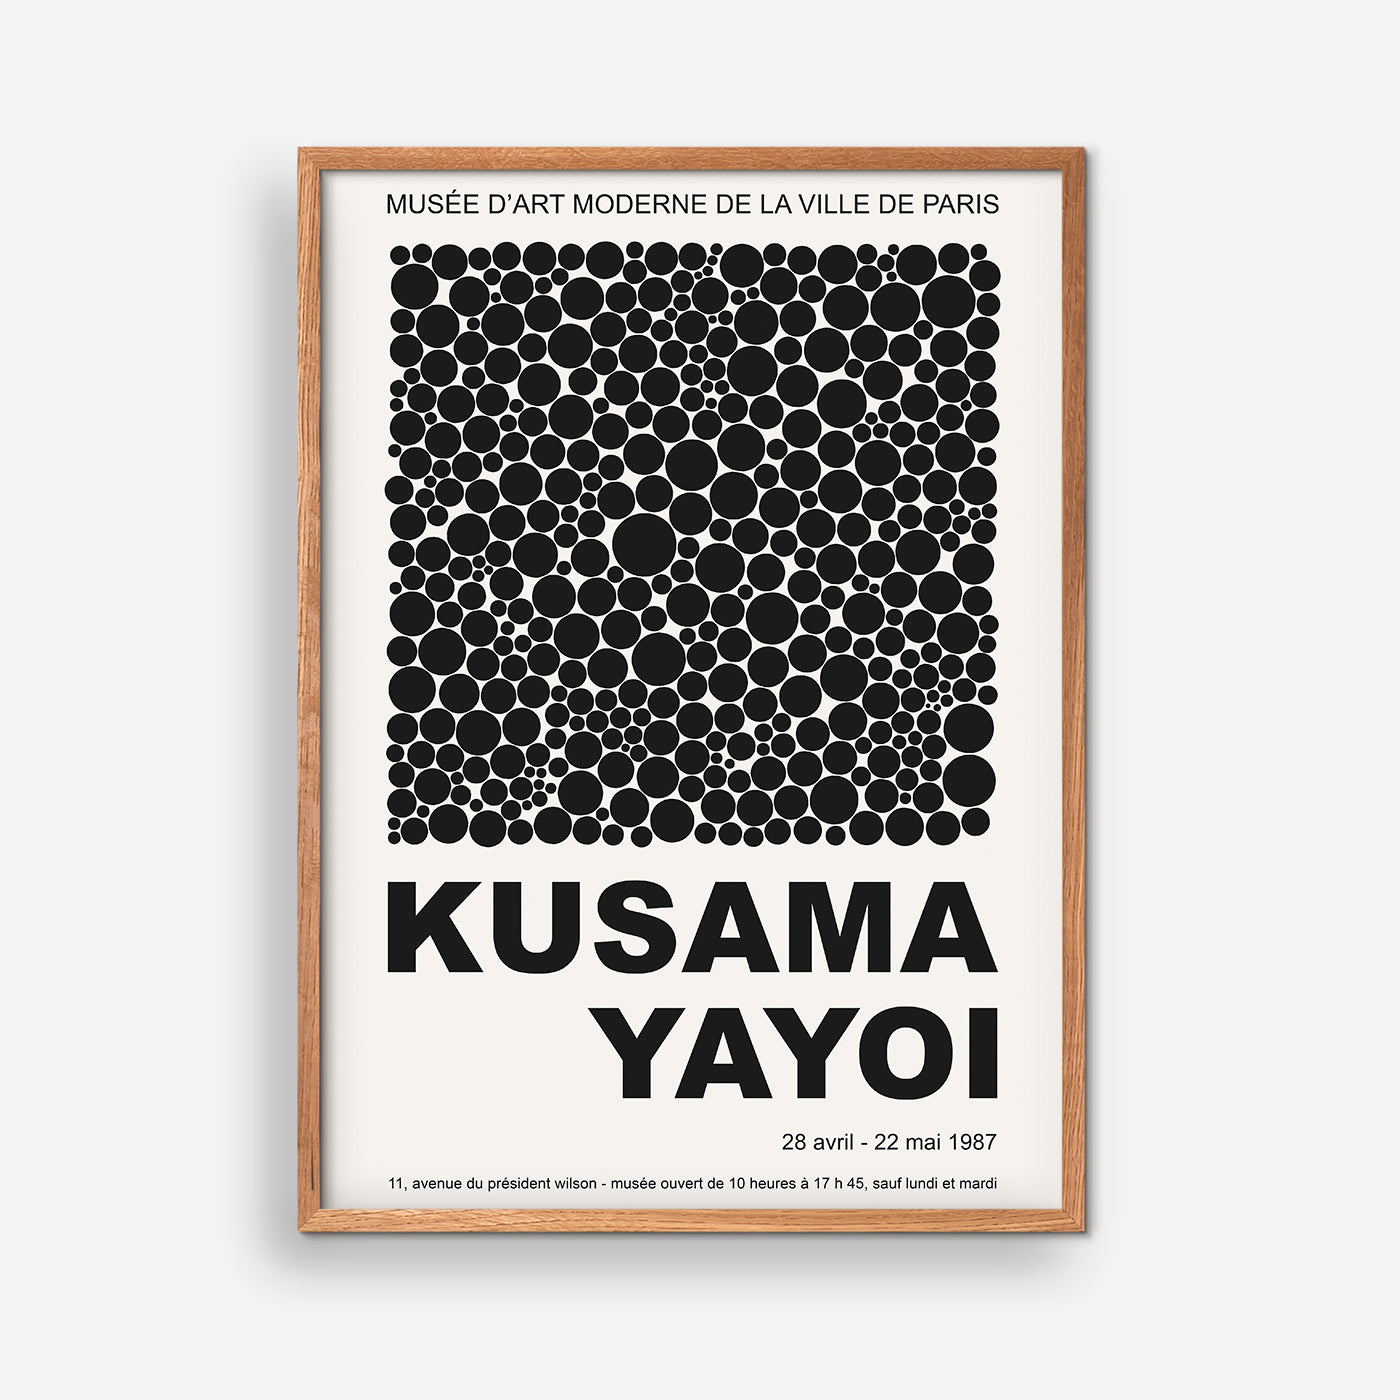 Kusama Yayoi Exhibition posters